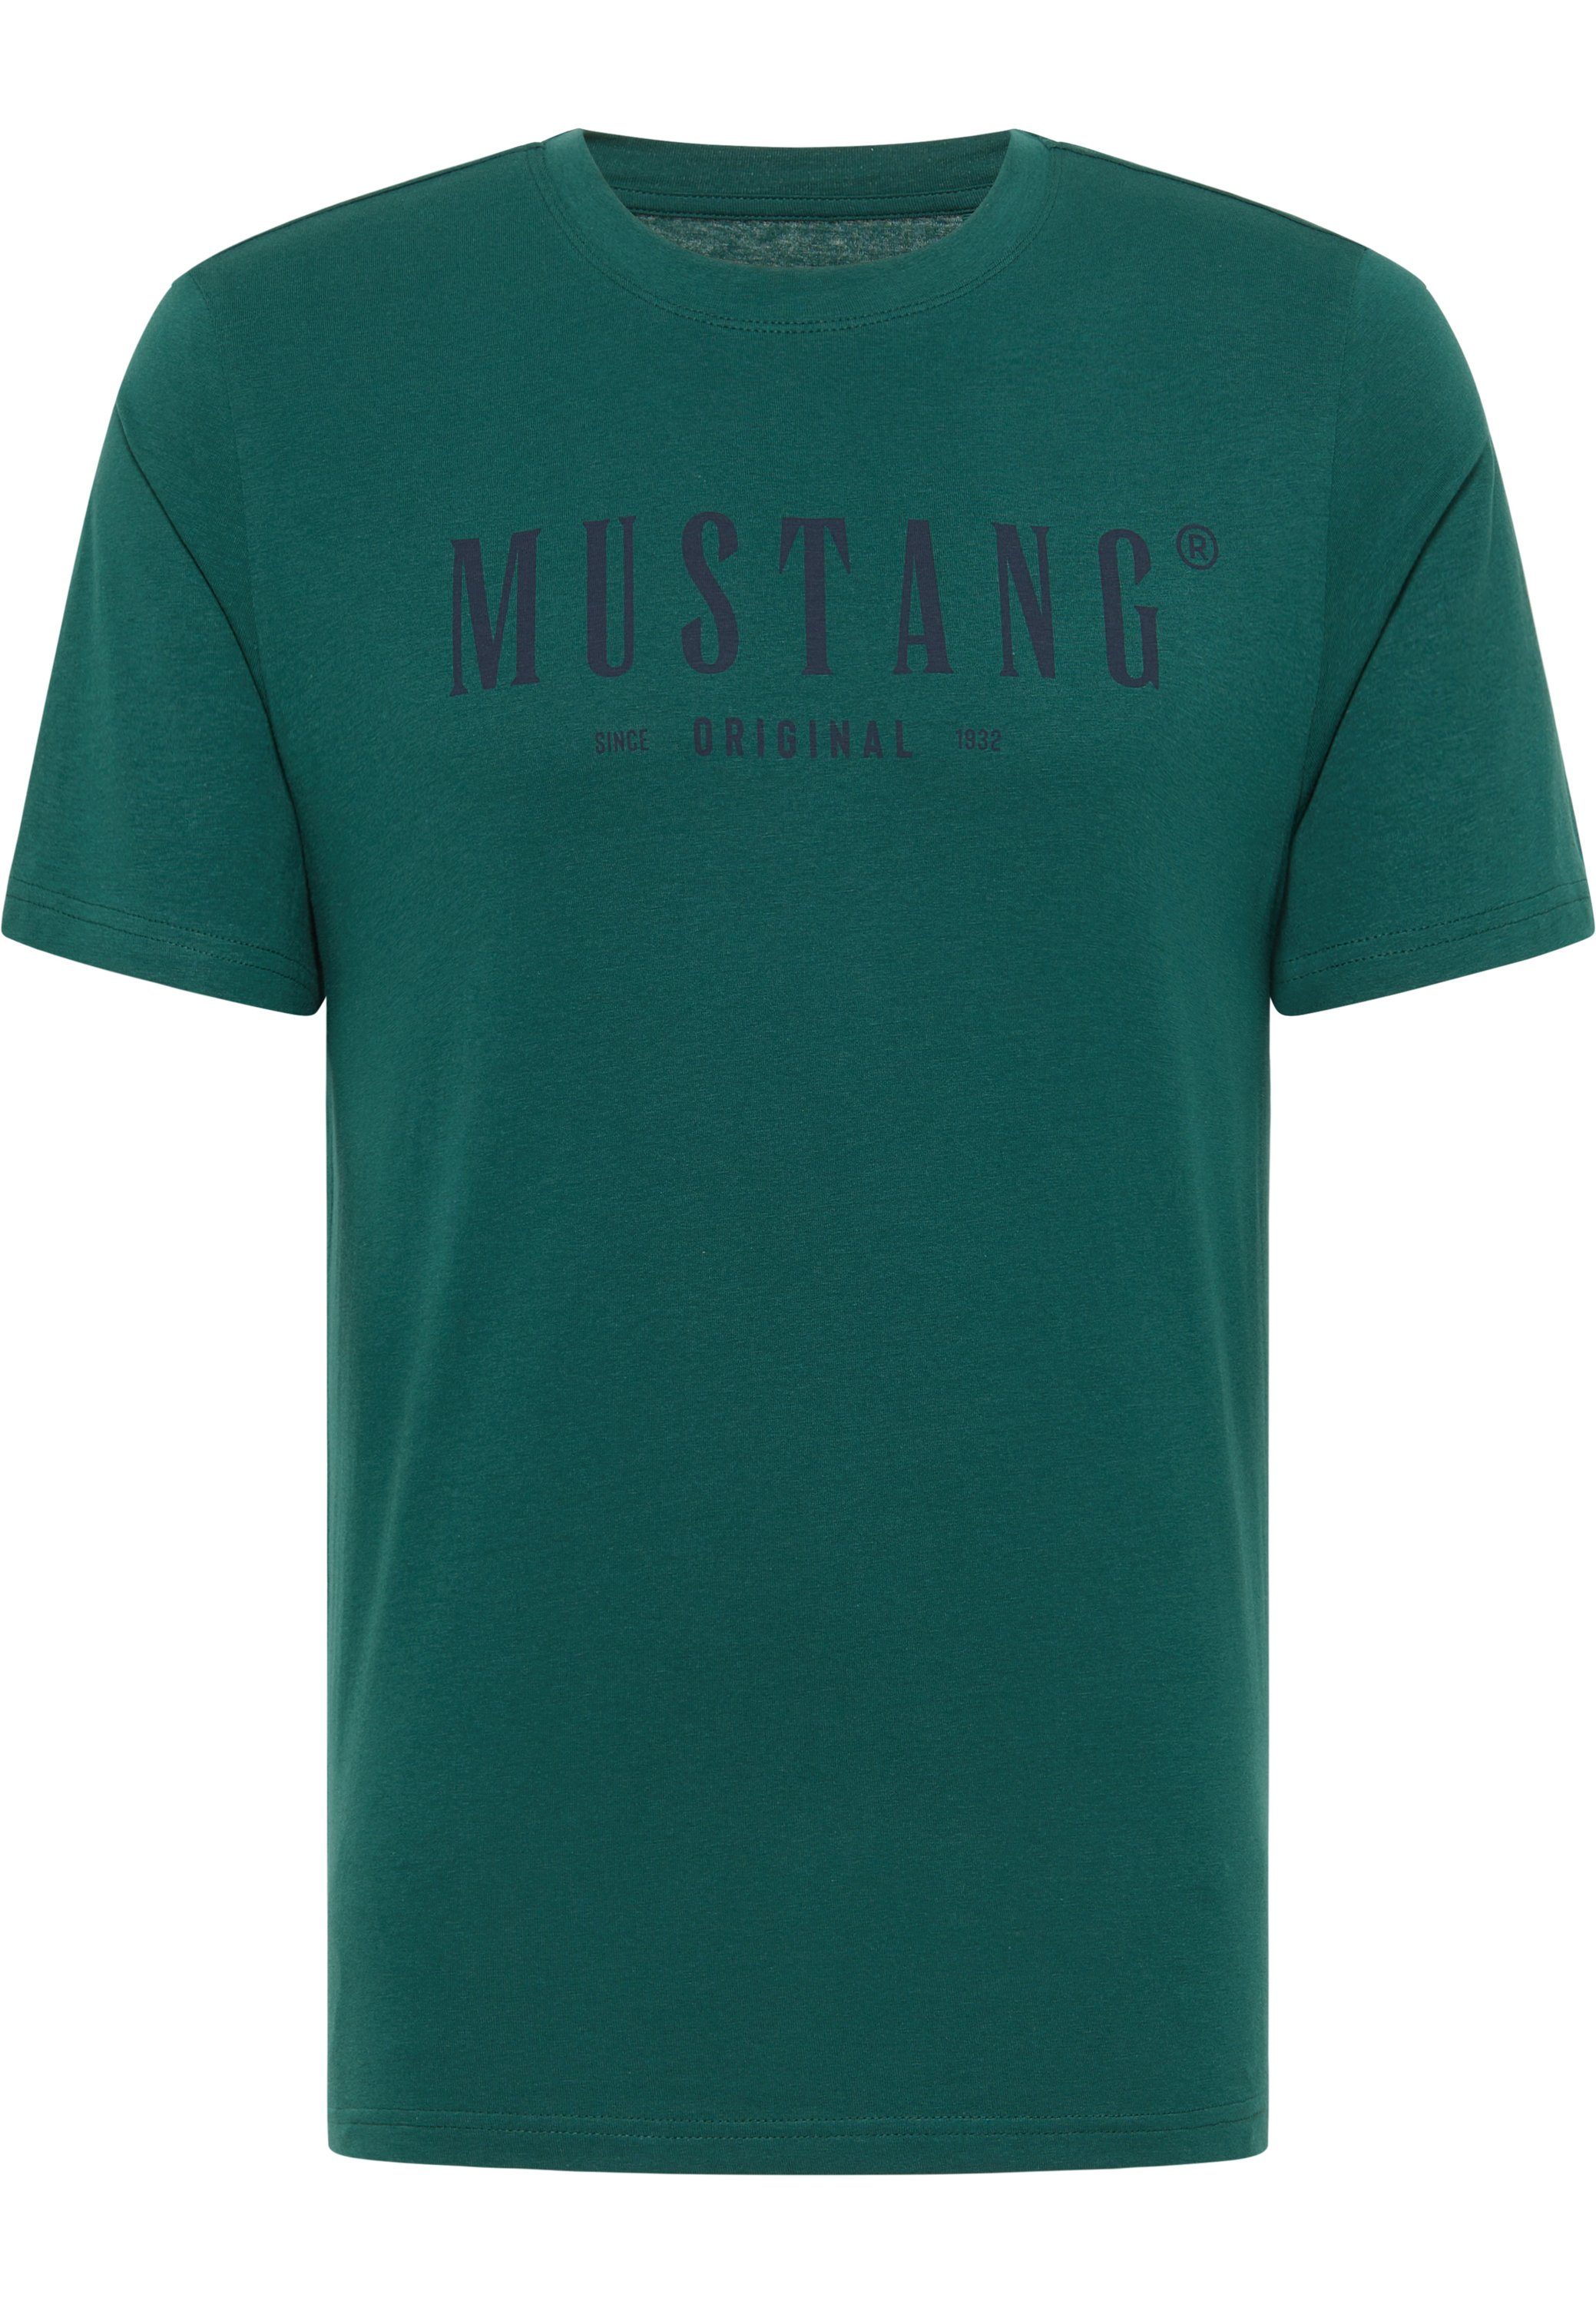 Kurzarmshirt grün Mustang Print-Shirt MUSTANG